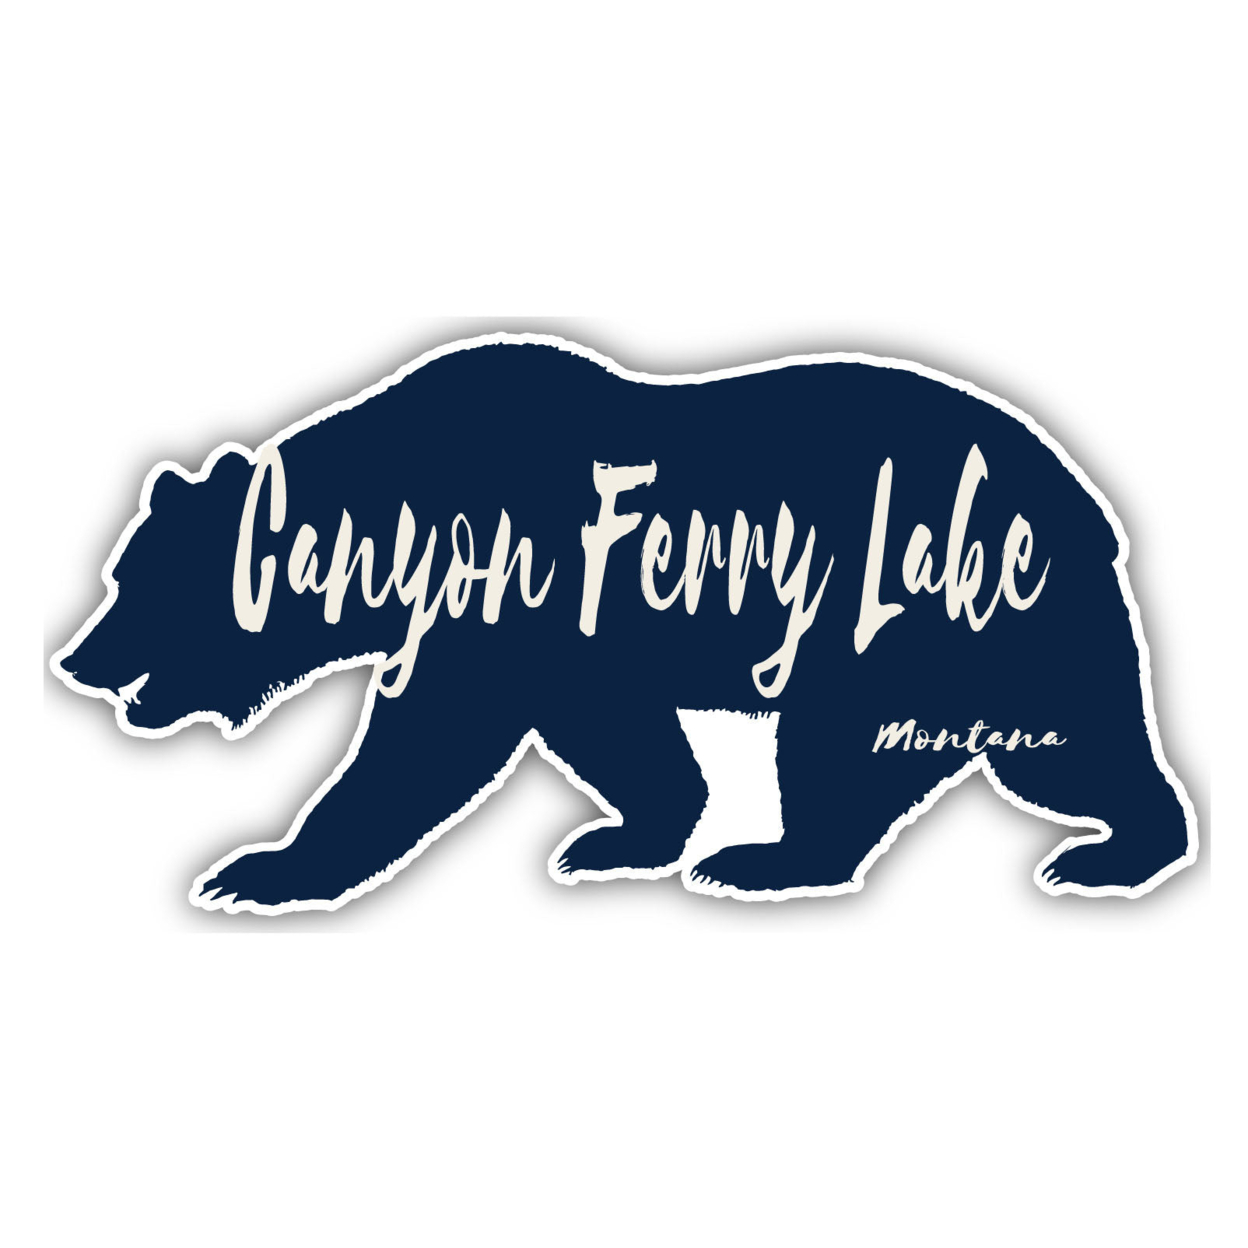 Canyon Ferry Lake Montana Souvenir Decorative Stickers (Choose Theme And Size) - Single Unit, 2-Inch, Bear